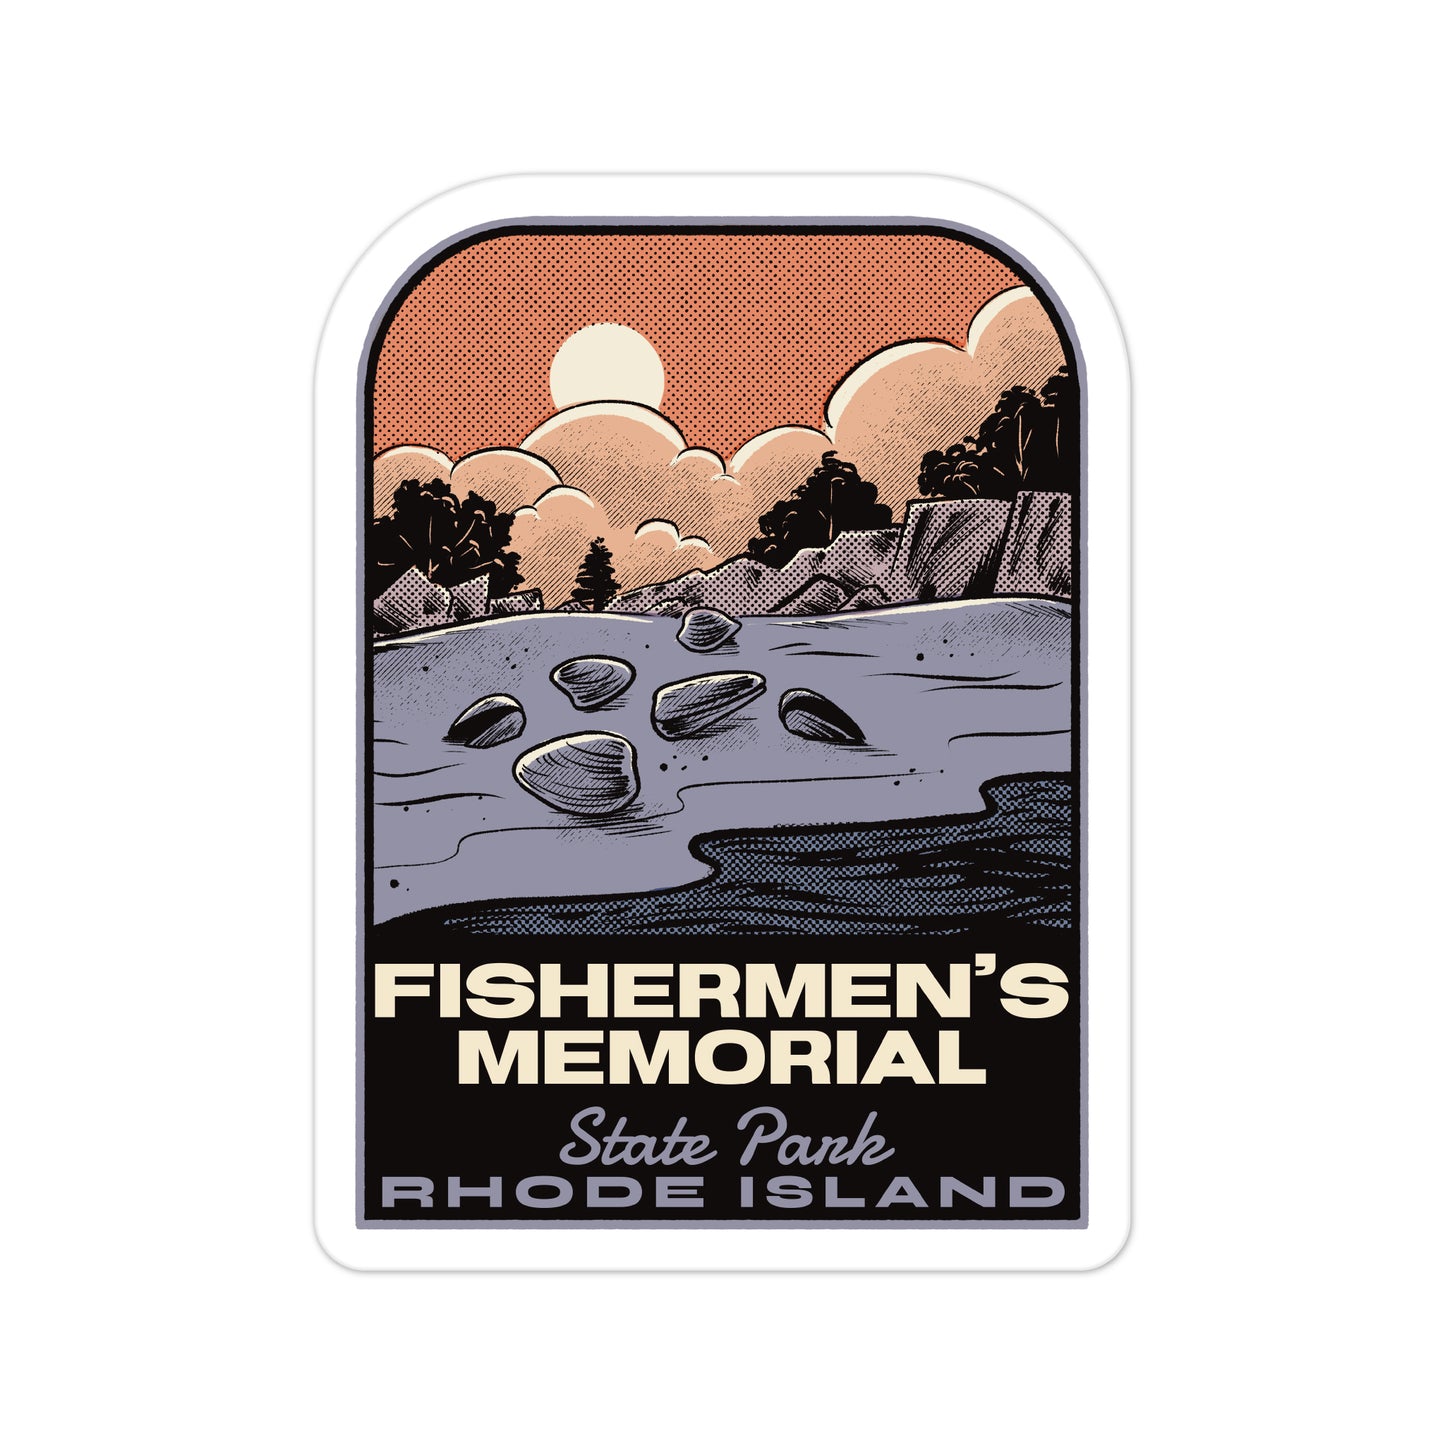 A sticker of Fishermens Memorial State Park